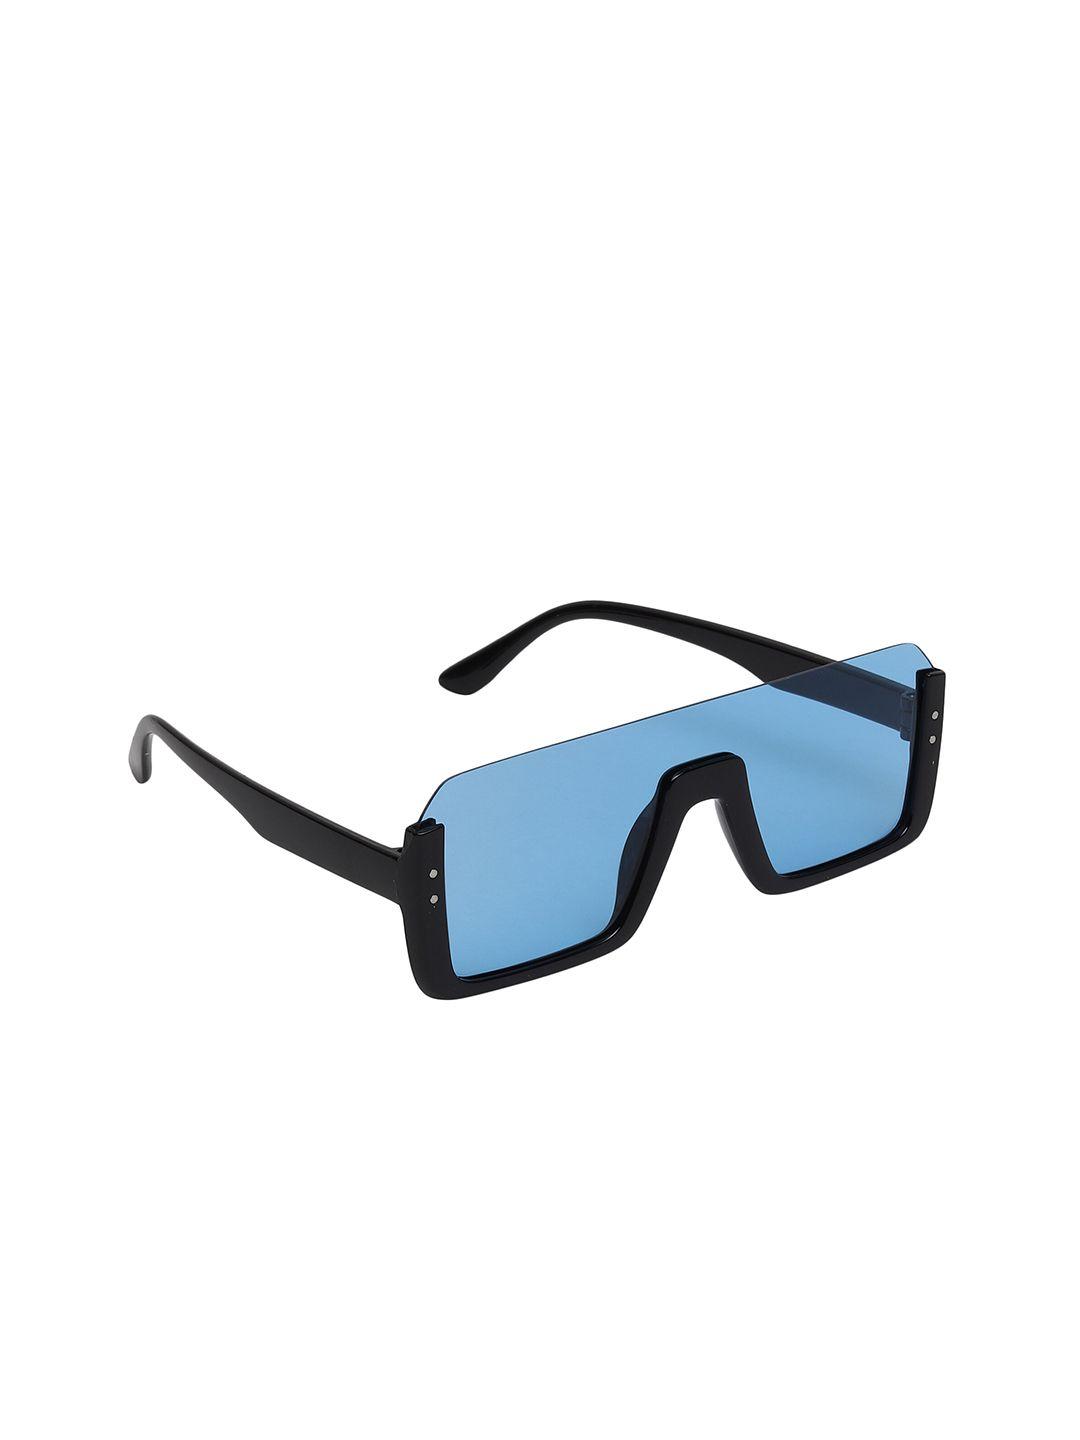 celebrity sunglasses unisex blue uv protected lens & black other sunglasses cl-mf